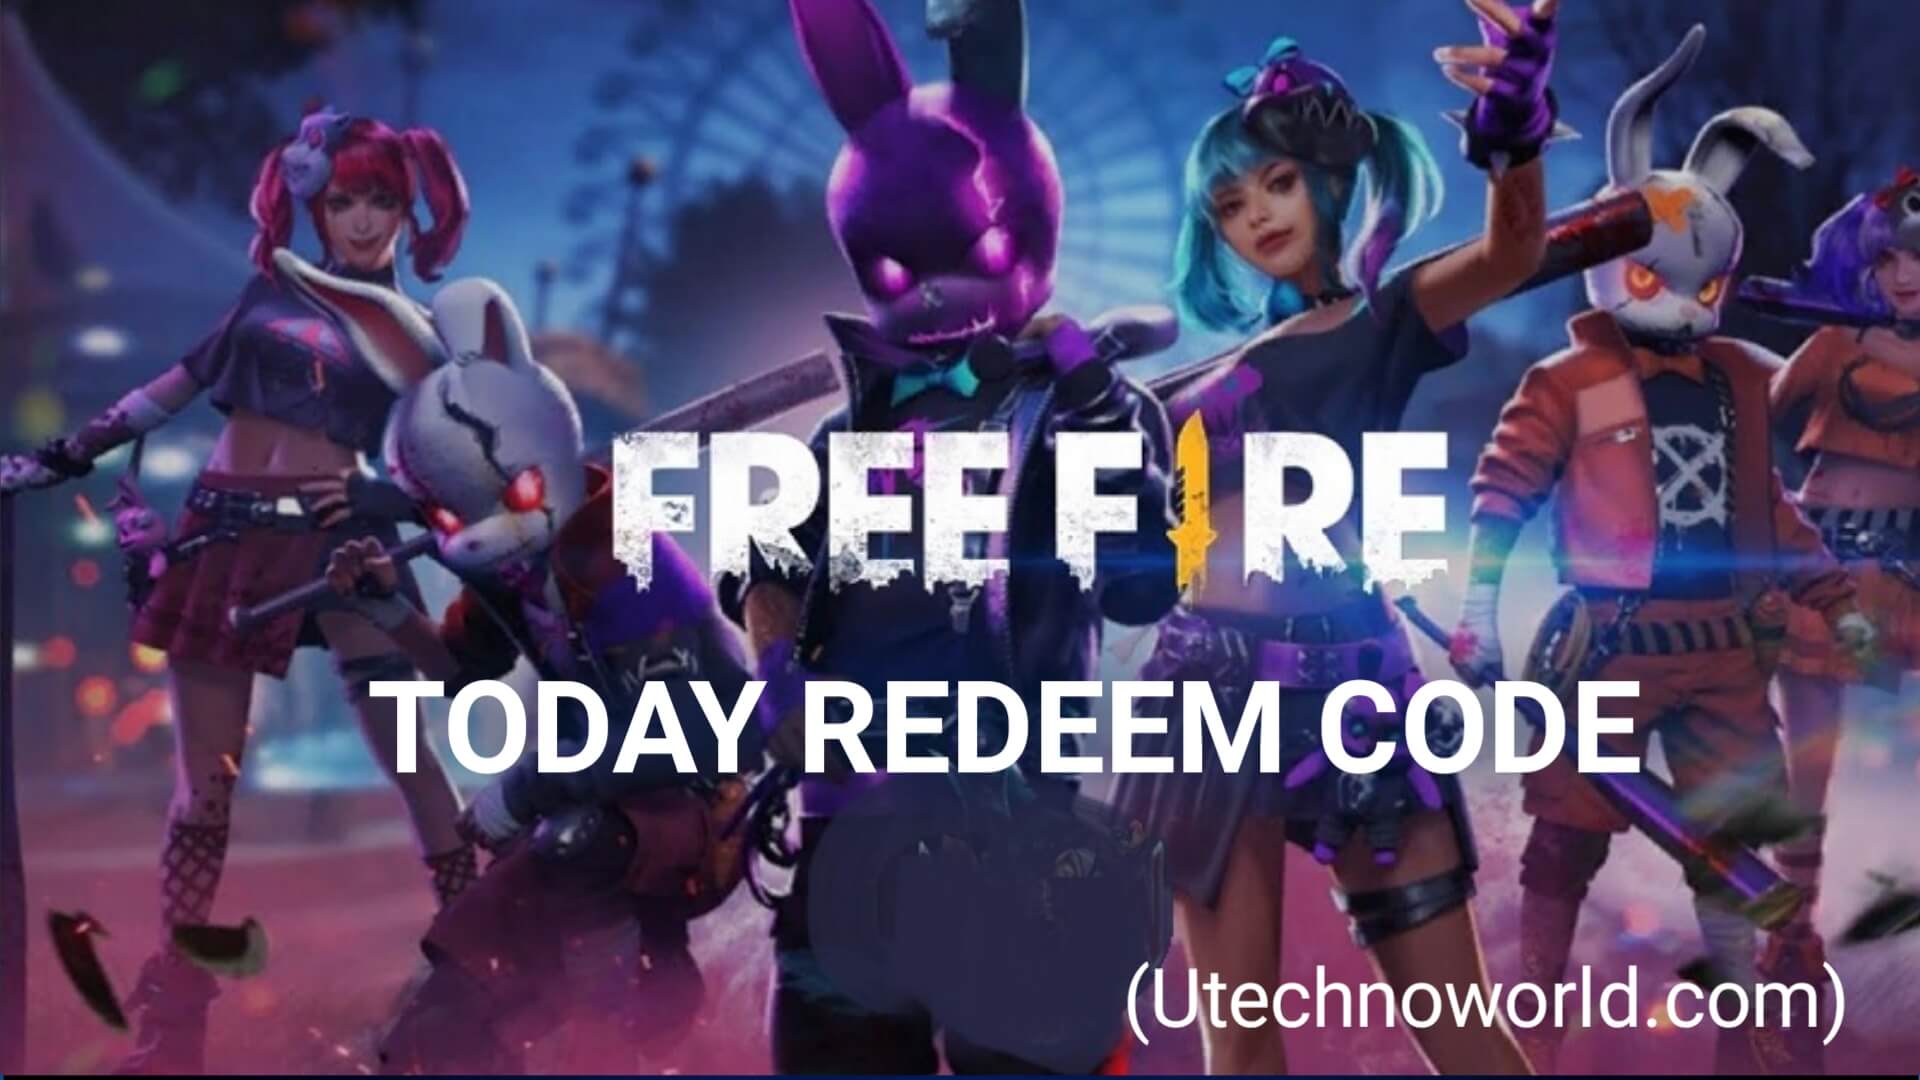 Free fire reward redeem code, February 10, 2022